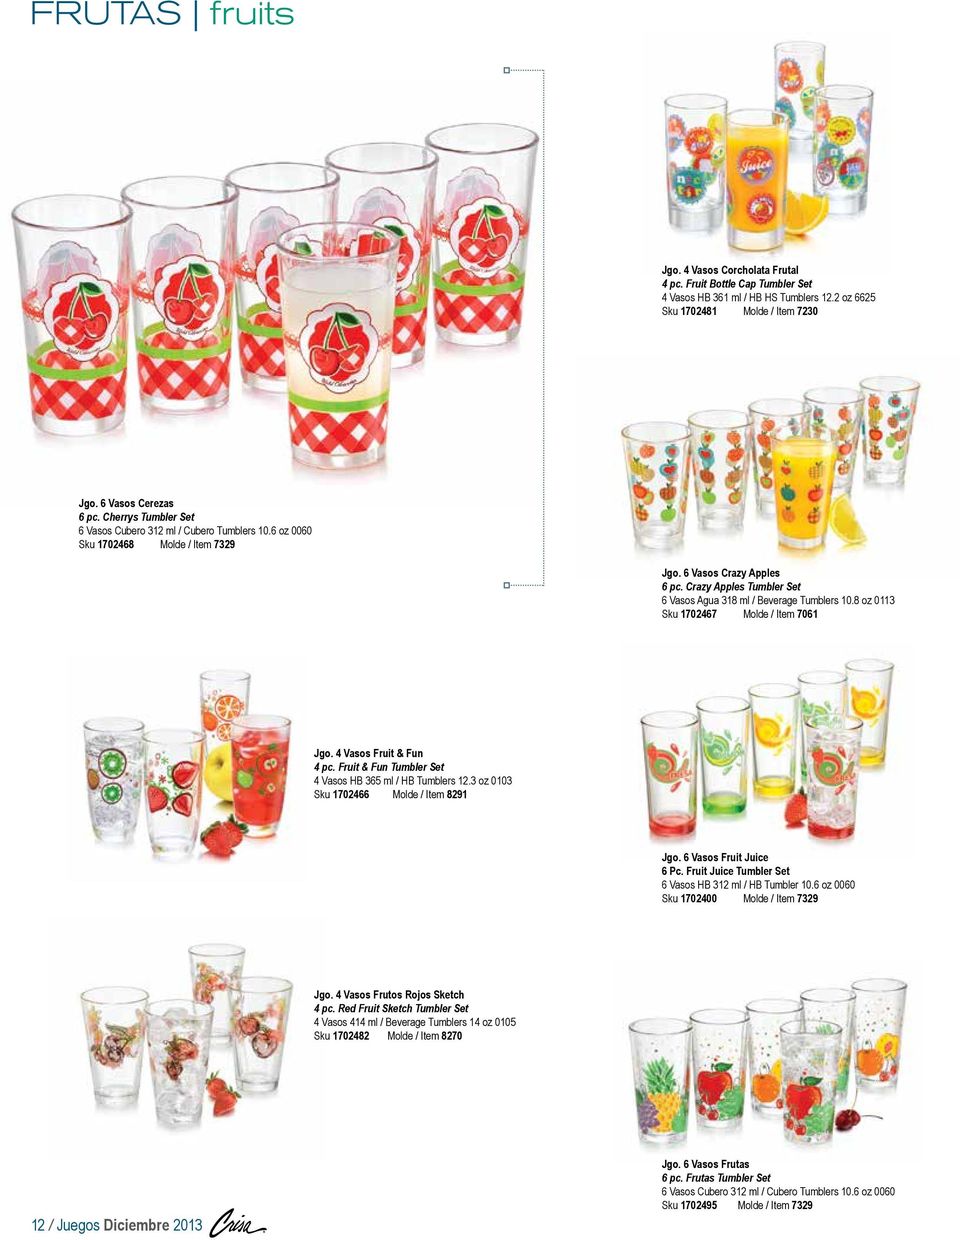 Crazy Apples Tumbler Set 6 Vasos Agua 318 ml / Beverage Tumblers 10.8 oz 0113 Sku 1702467 Molde / Item 7061 Jgo. 4 Vasos Fruit & Fun 4 pc. Fruit & Fun Tumbler Set 4 Vasos HB 365 ml / HB Tumblers 12.